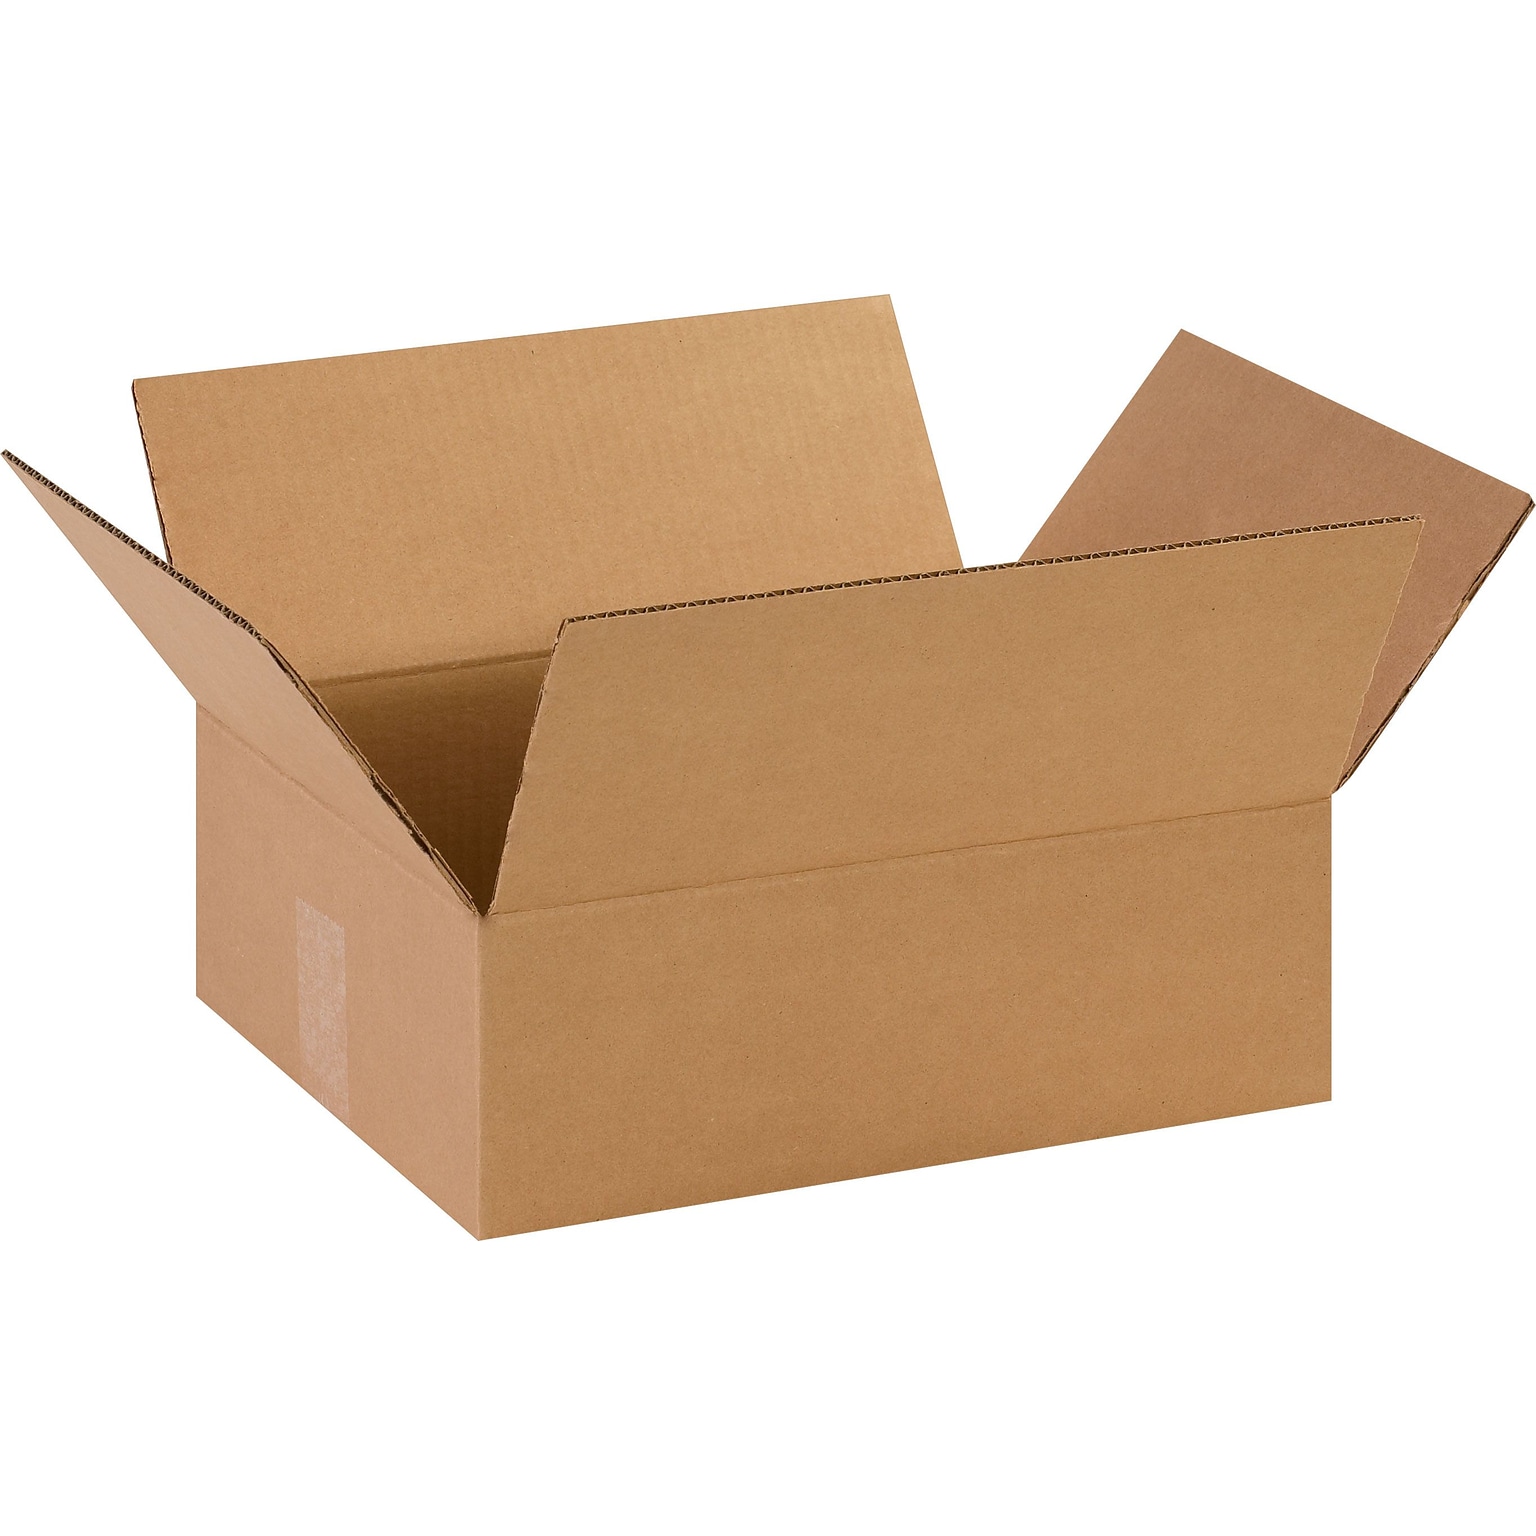 14 x 11 x 4.5 Shipping Boxes, 32 ECT, Brown, 25/Bundle (14114)